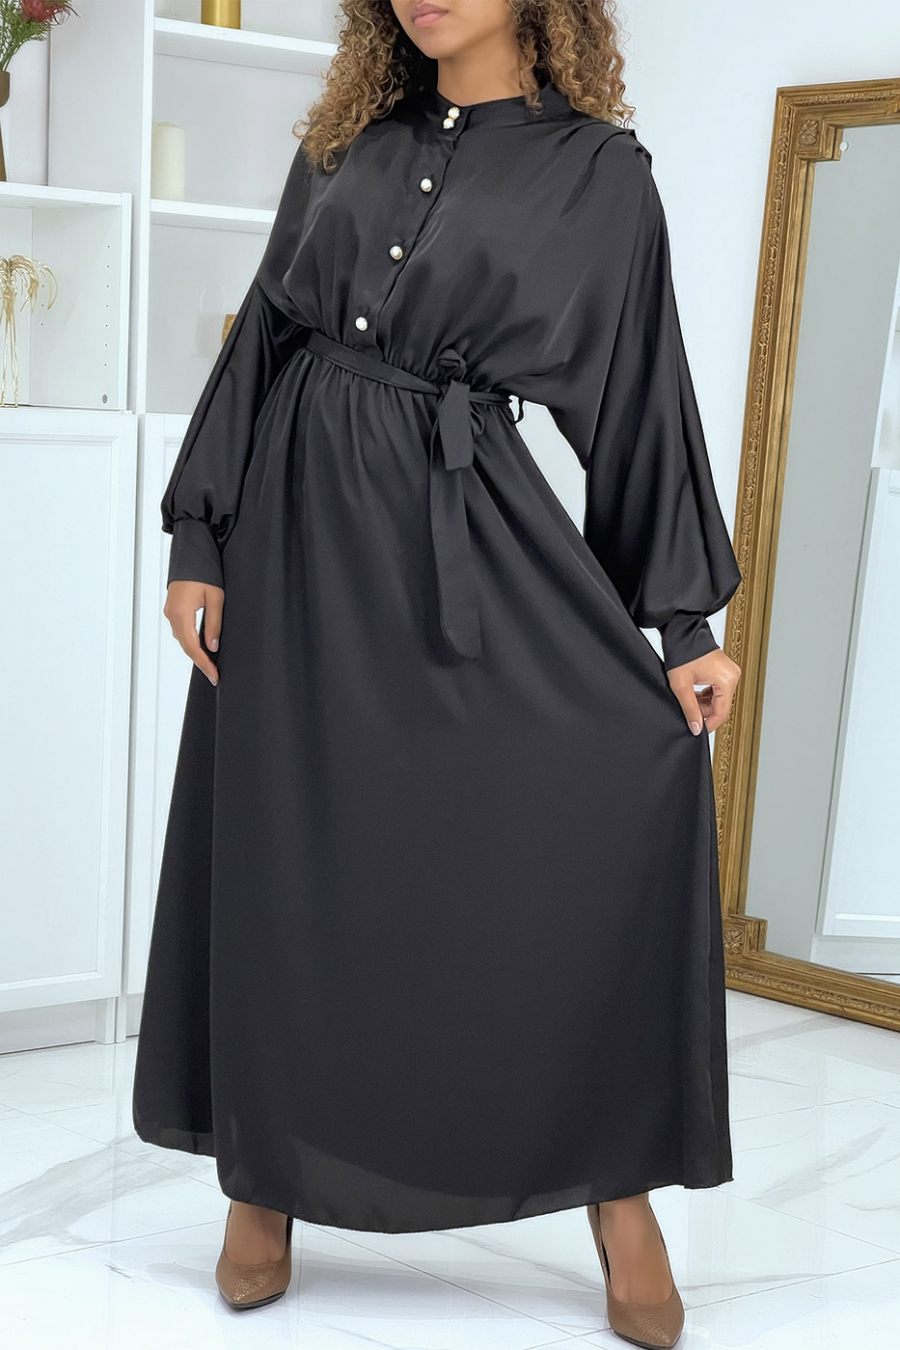 Long black satin dress with long sleeves